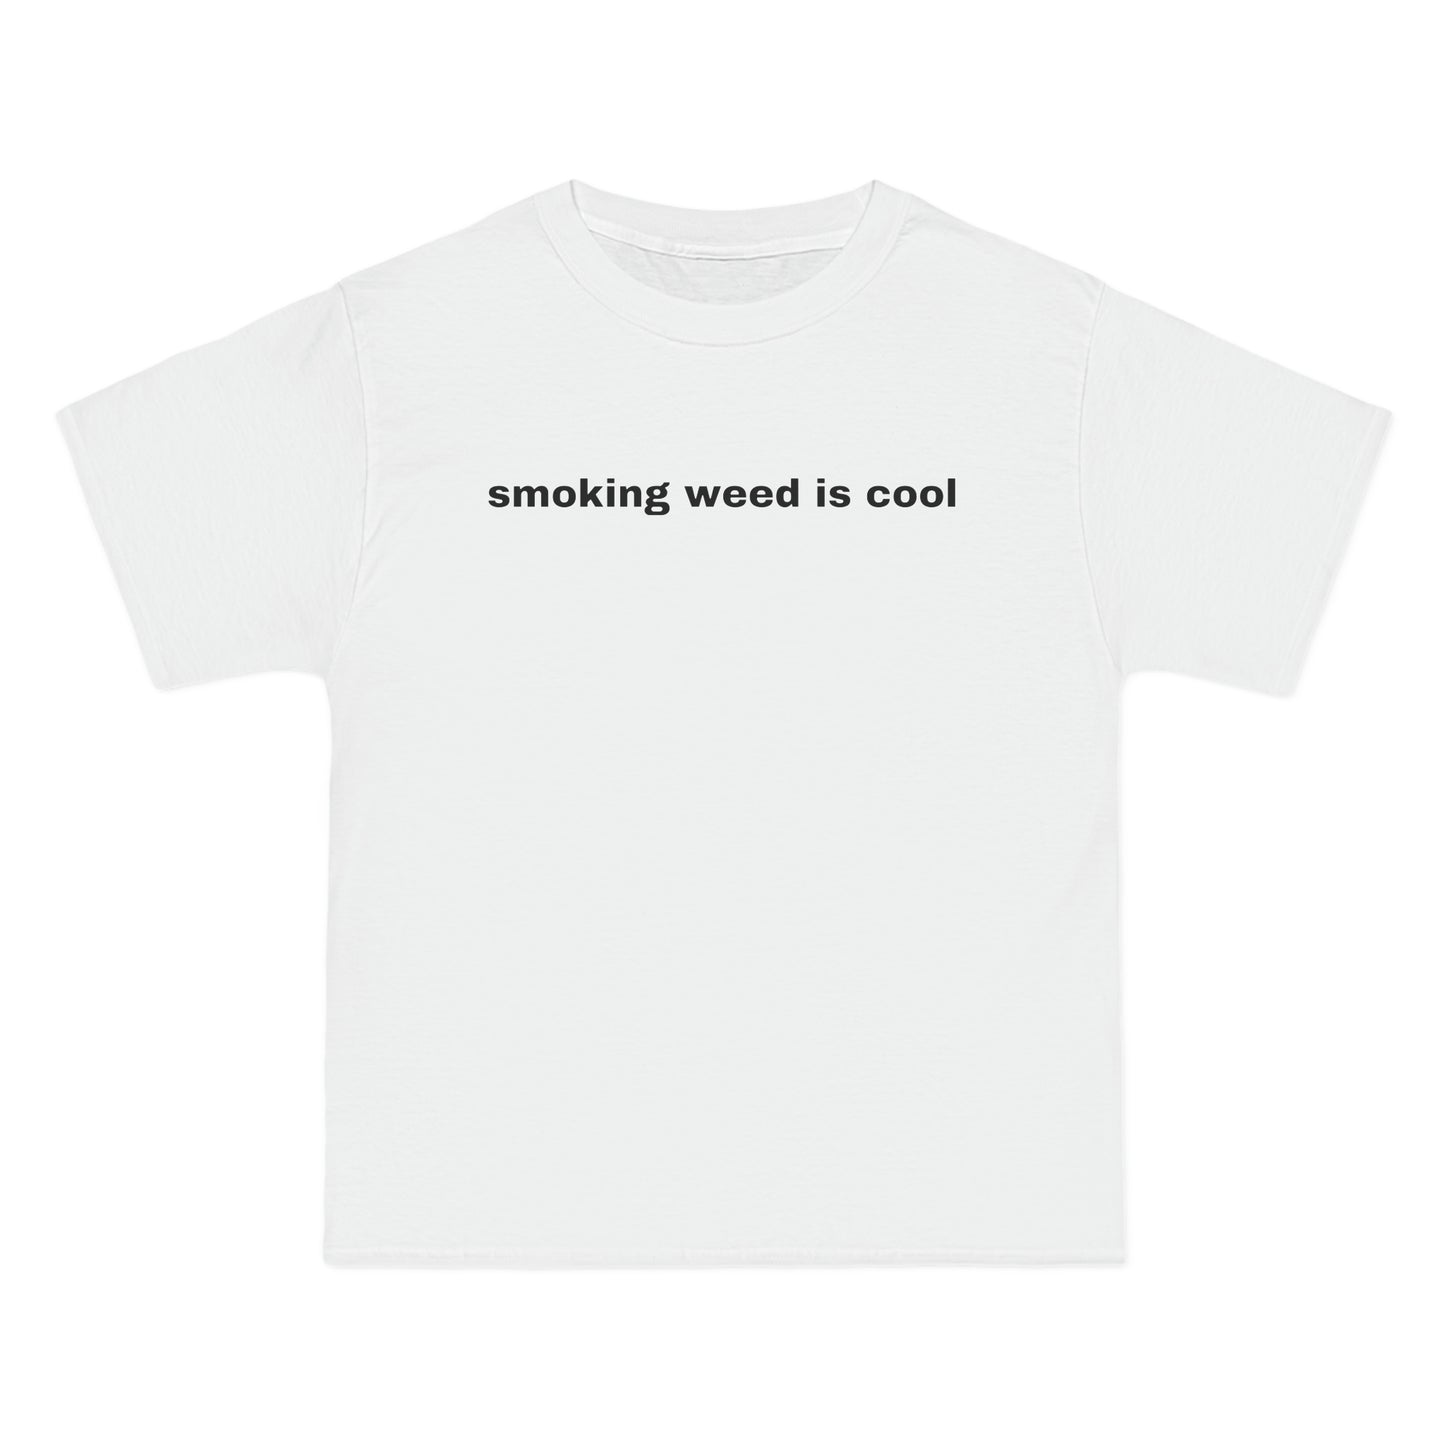 smoking weed is cool Tee